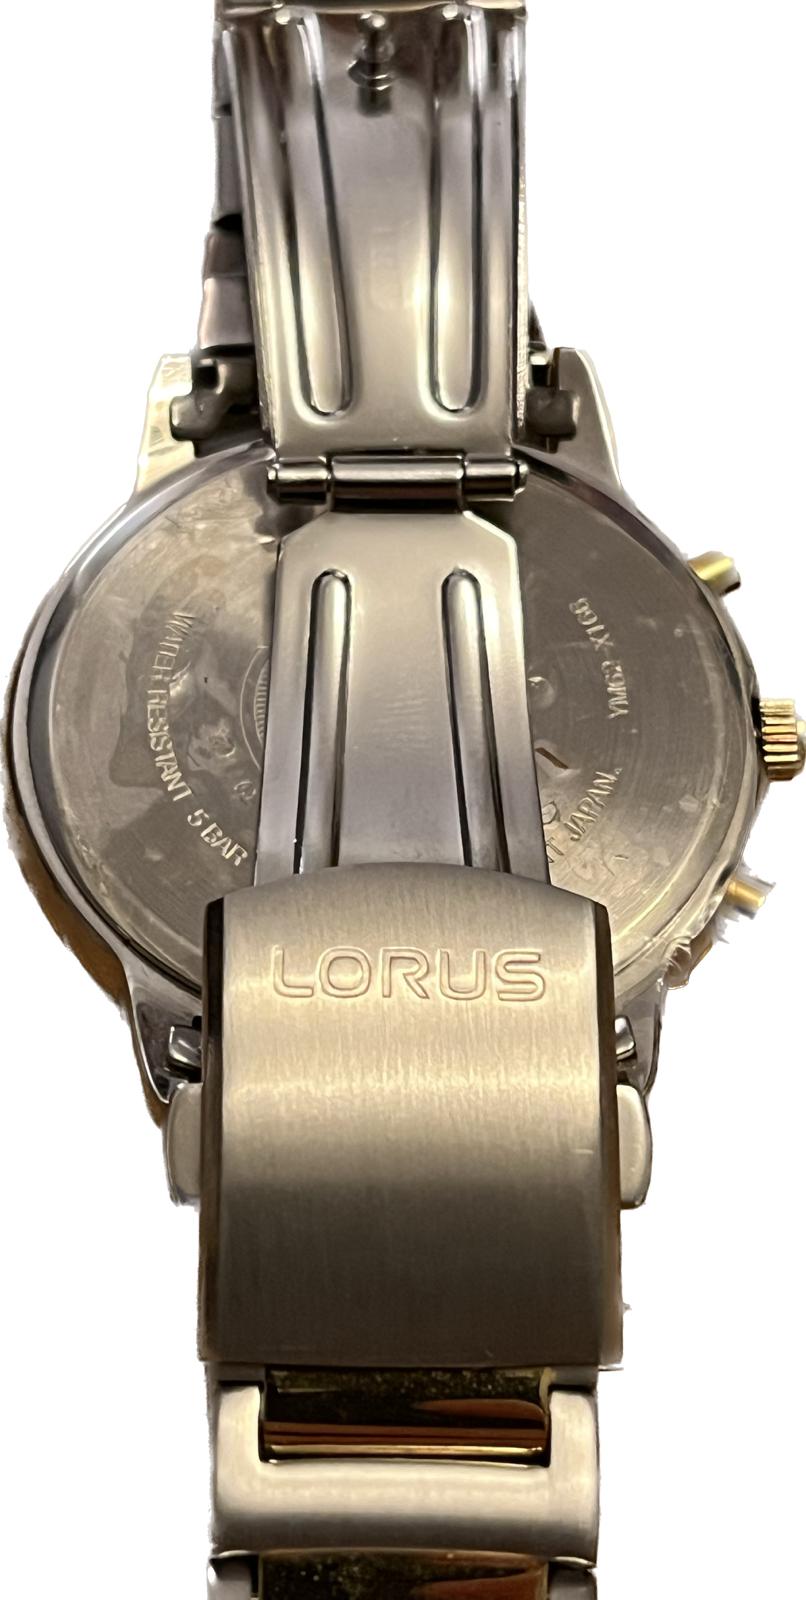 LORUS Chronograph Watch - New